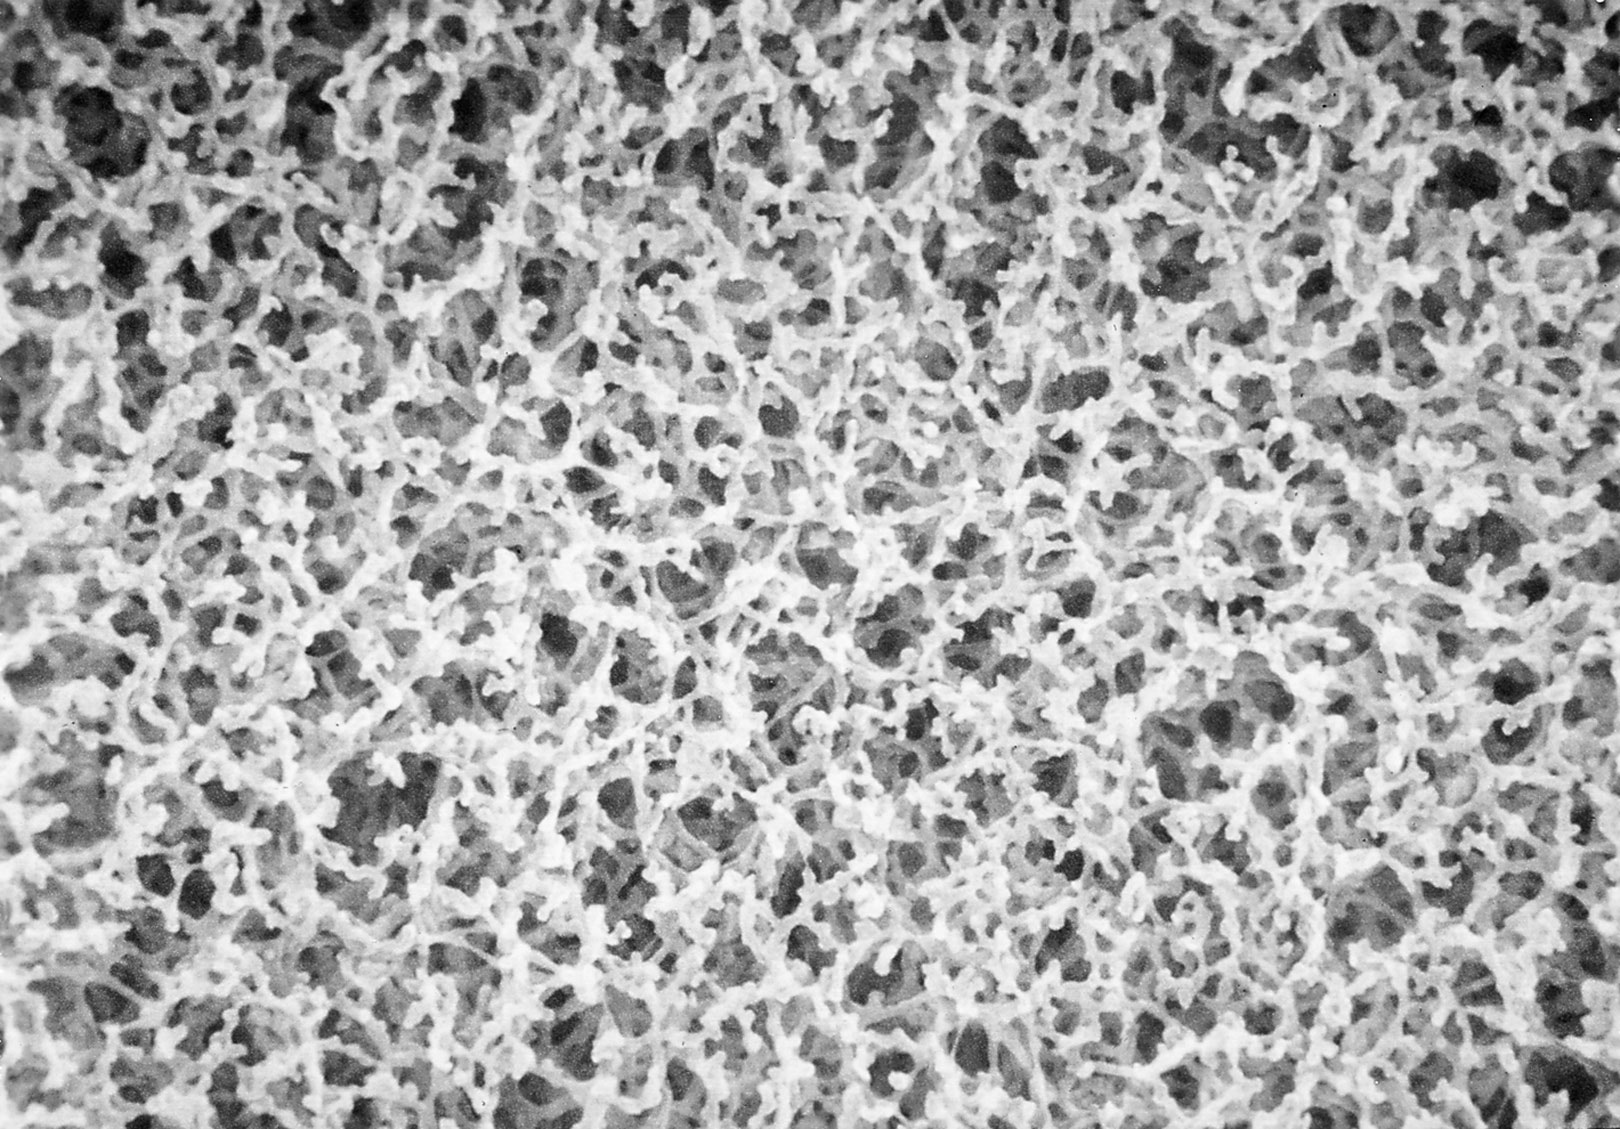 Membrana de ésteres mezclados de nitrocelulosa. GVS. Material: ME. Ø (mm): 142. Tamaño poro (µm): 0,22. Estéril: No. Cuadrícula: No. Color: Blanca